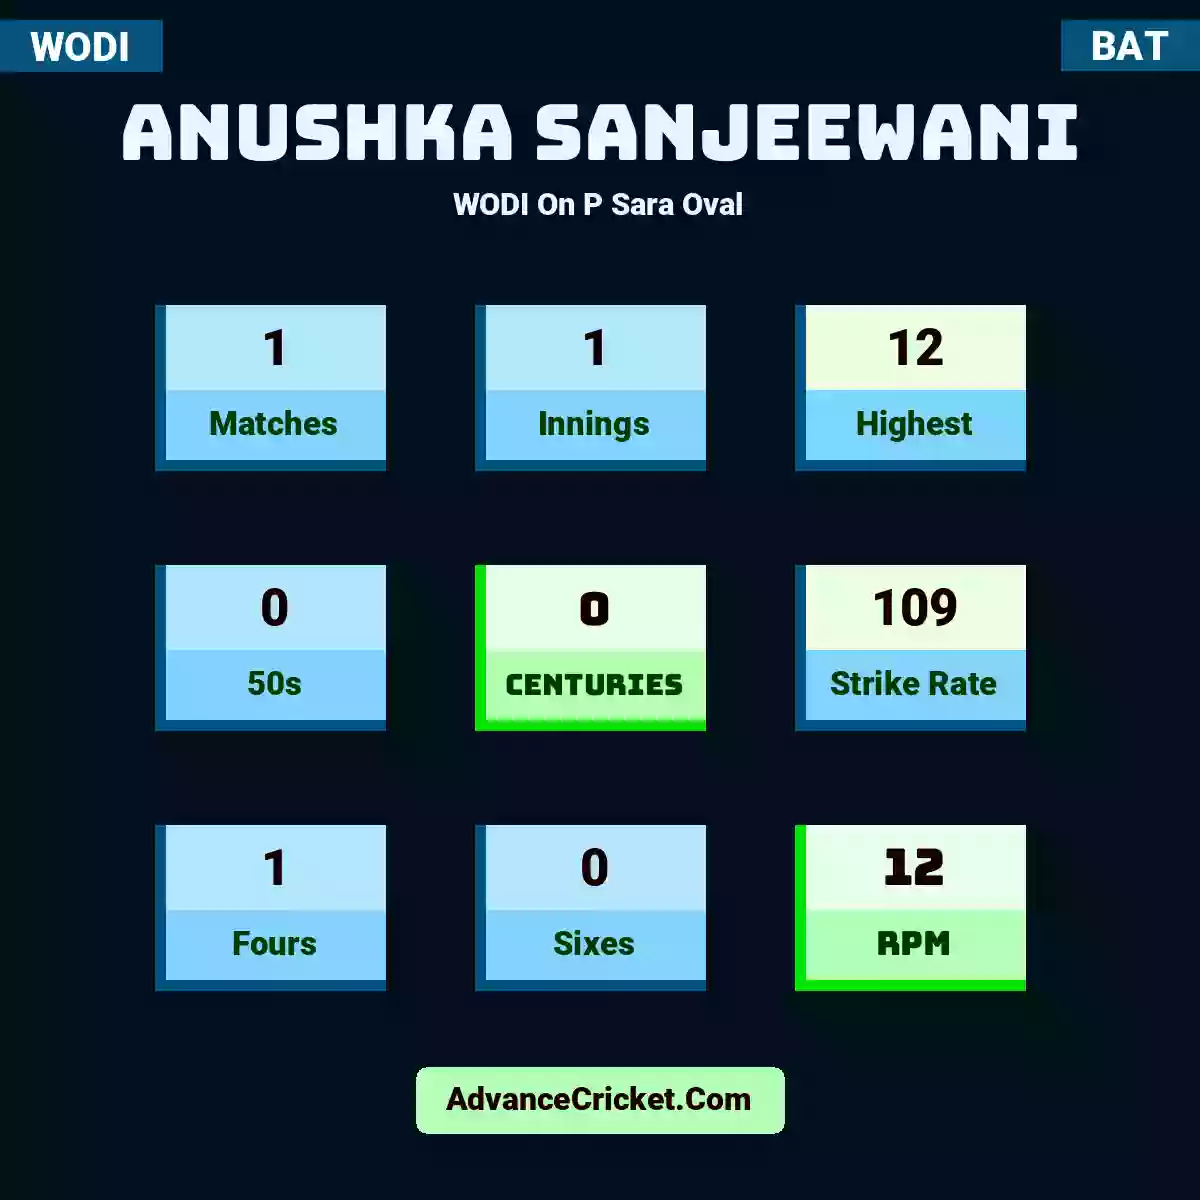 Anushka Sanjeewani WODI  On P Sara Oval, Anushka Sanjeewani played 1 matches, scored 12 runs as highest, 0 half-centuries, and 0 centuries, with a strike rate of 109. A.Sanjeewani hit 1 fours and 0 sixes, with an RPM of 12.